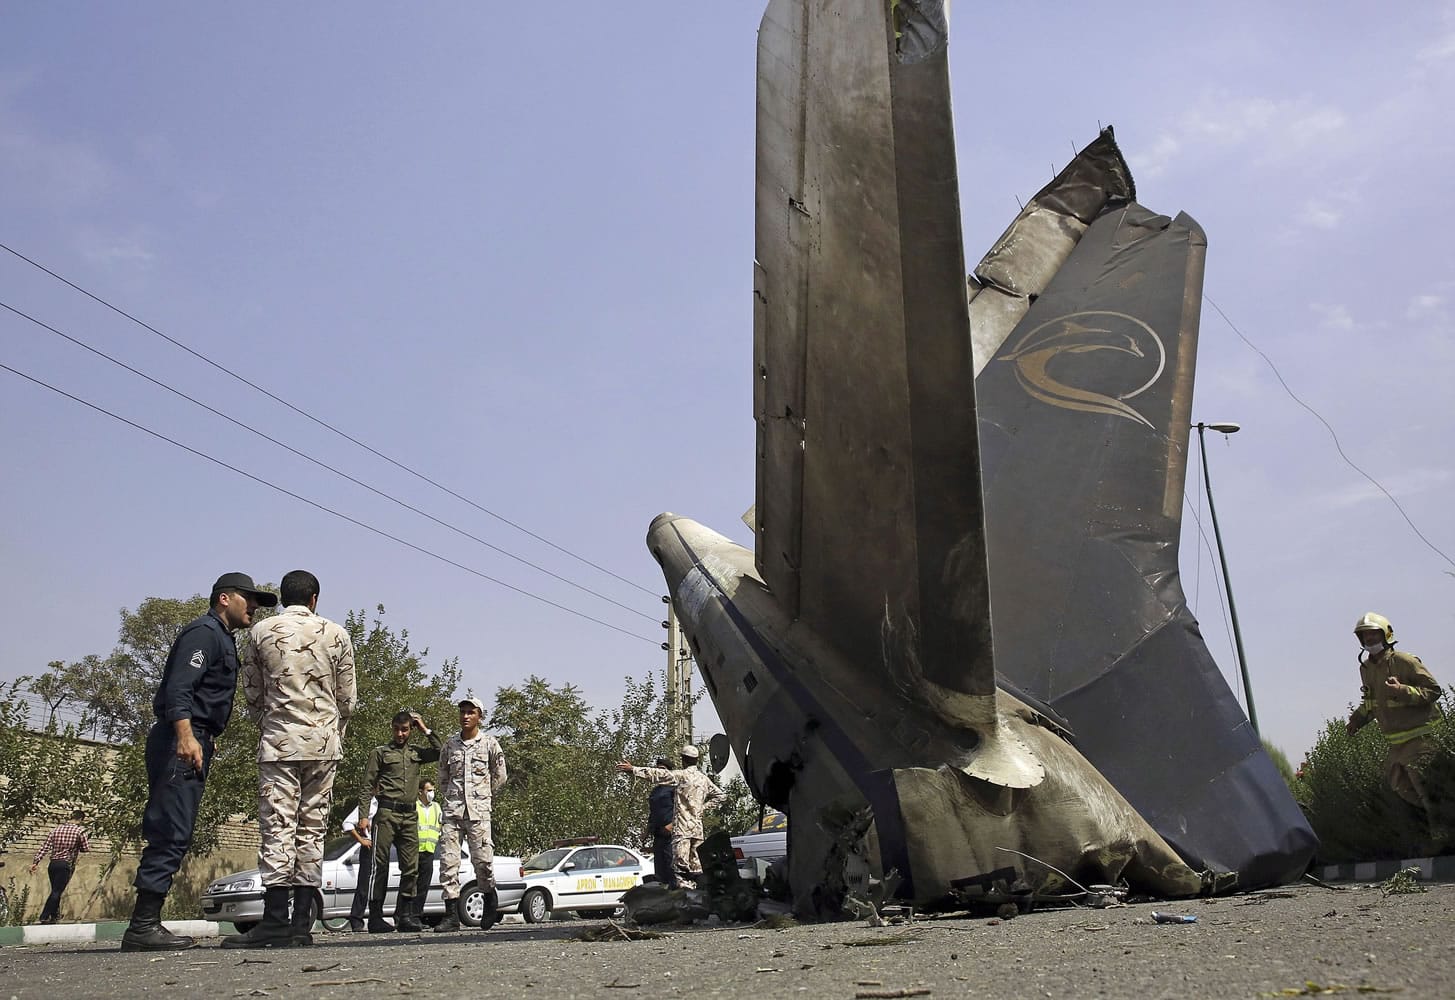 Iranian Revolutionary Guards inspect the site of a plane crash Sunday near Tehran, Iran.